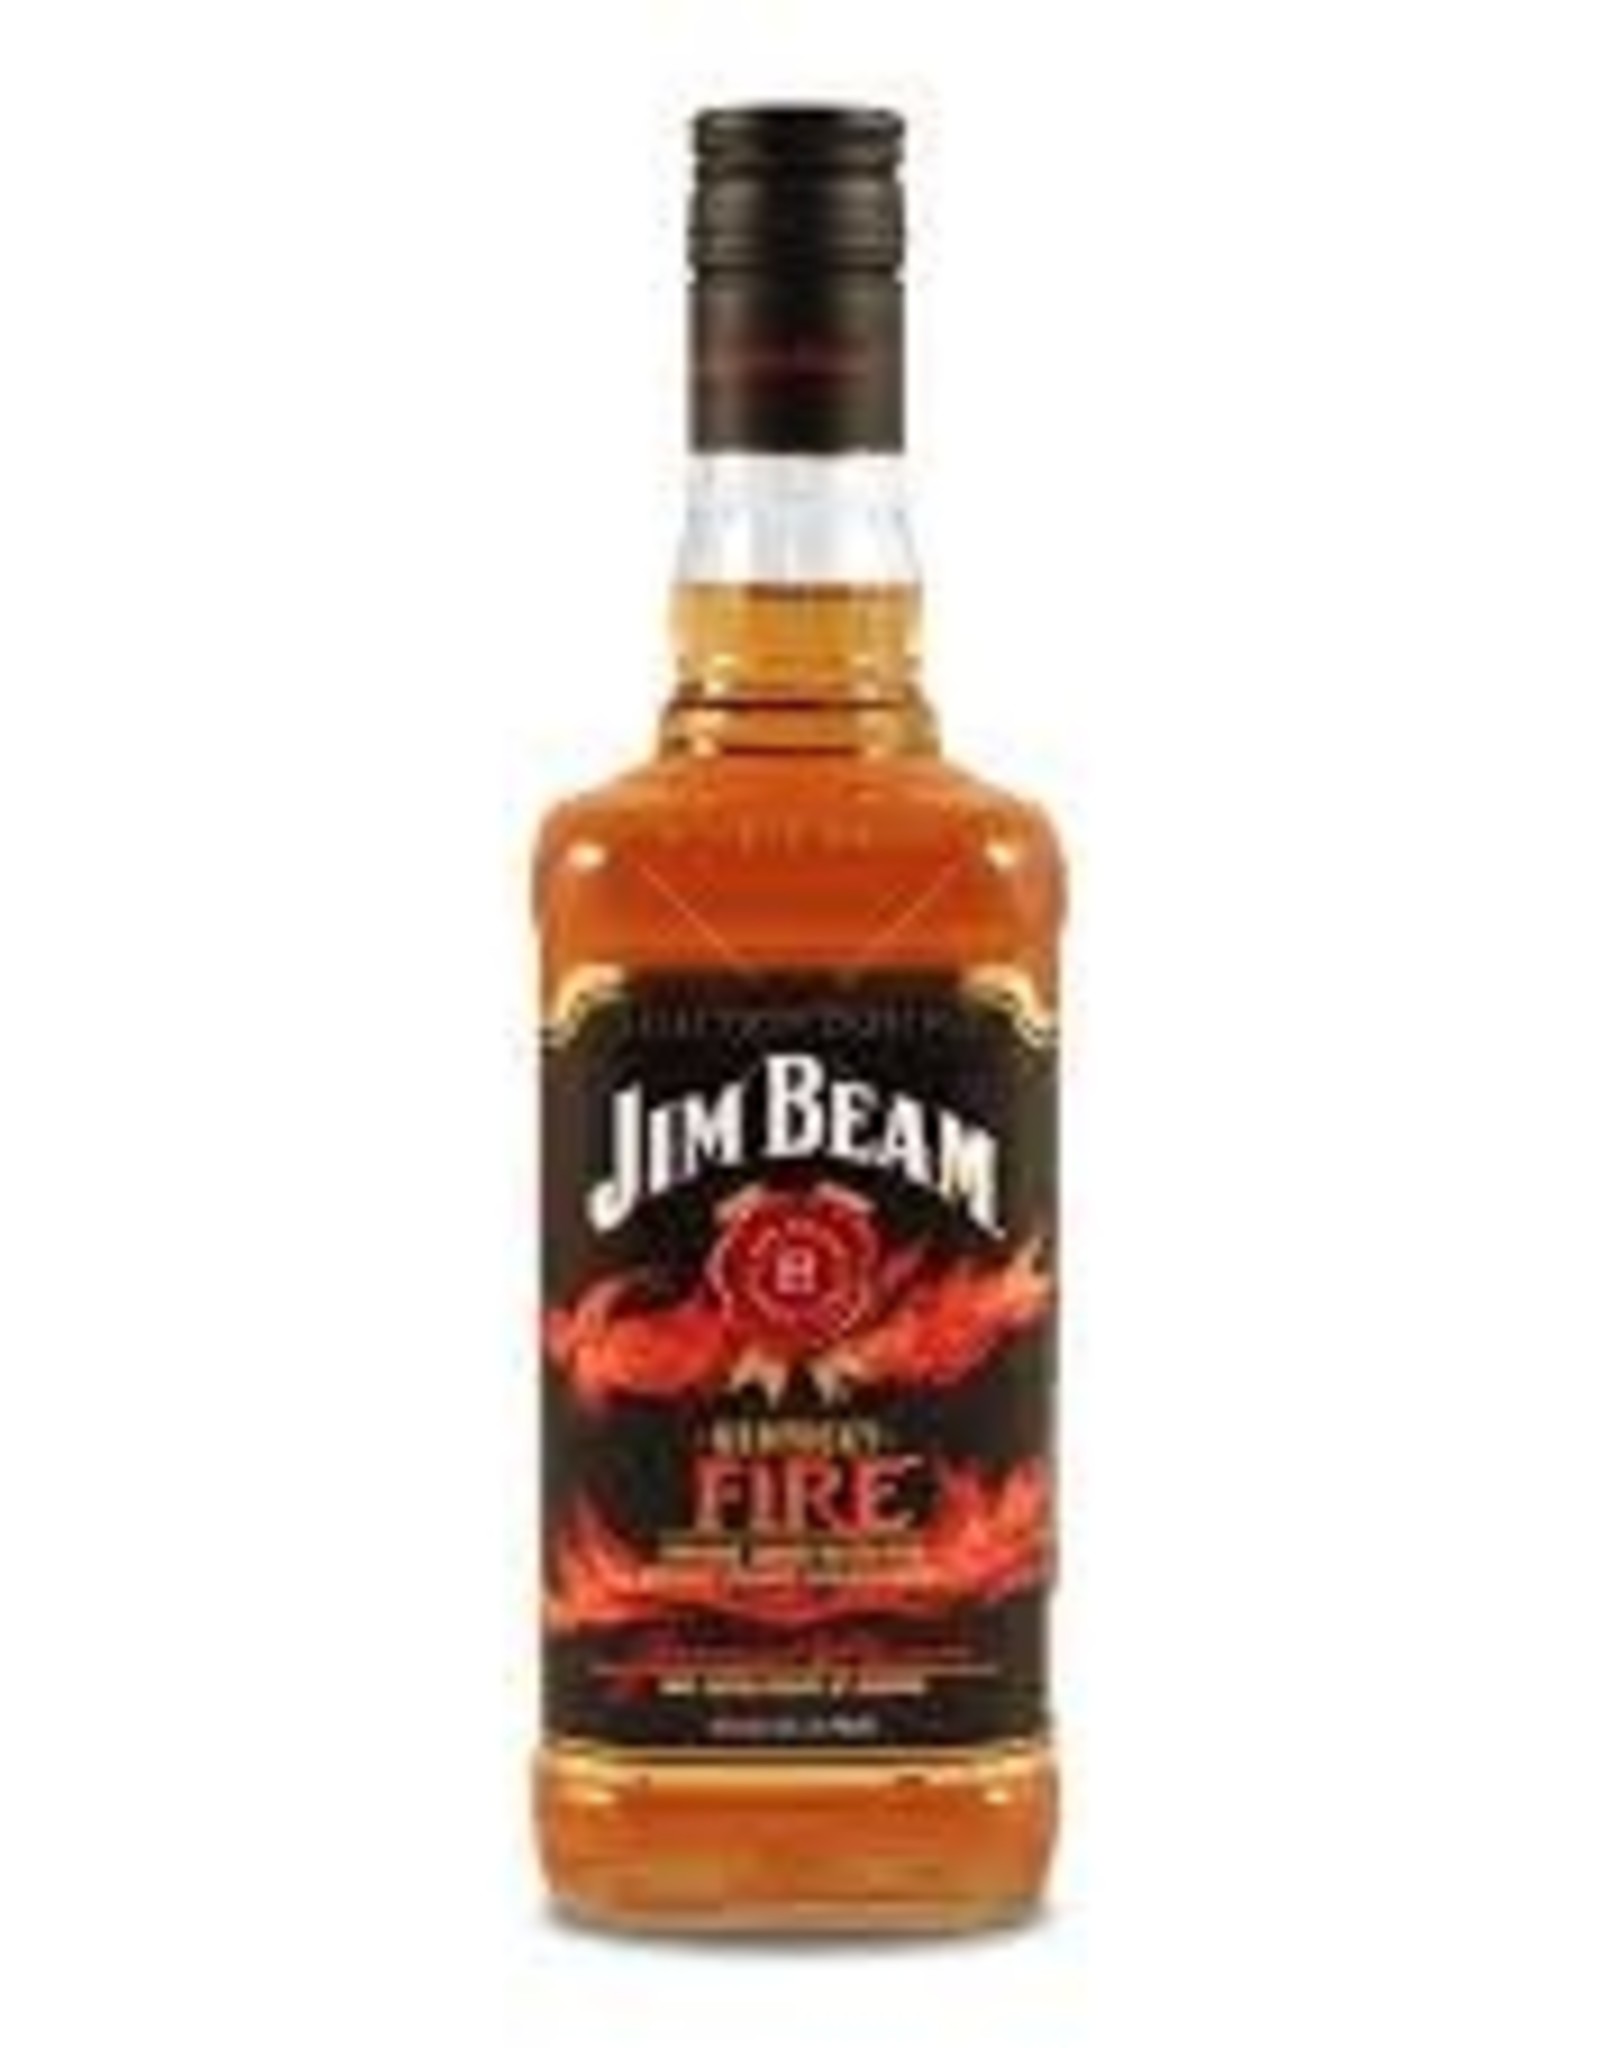 Jim Beam Jim Beam Fire Bourbon